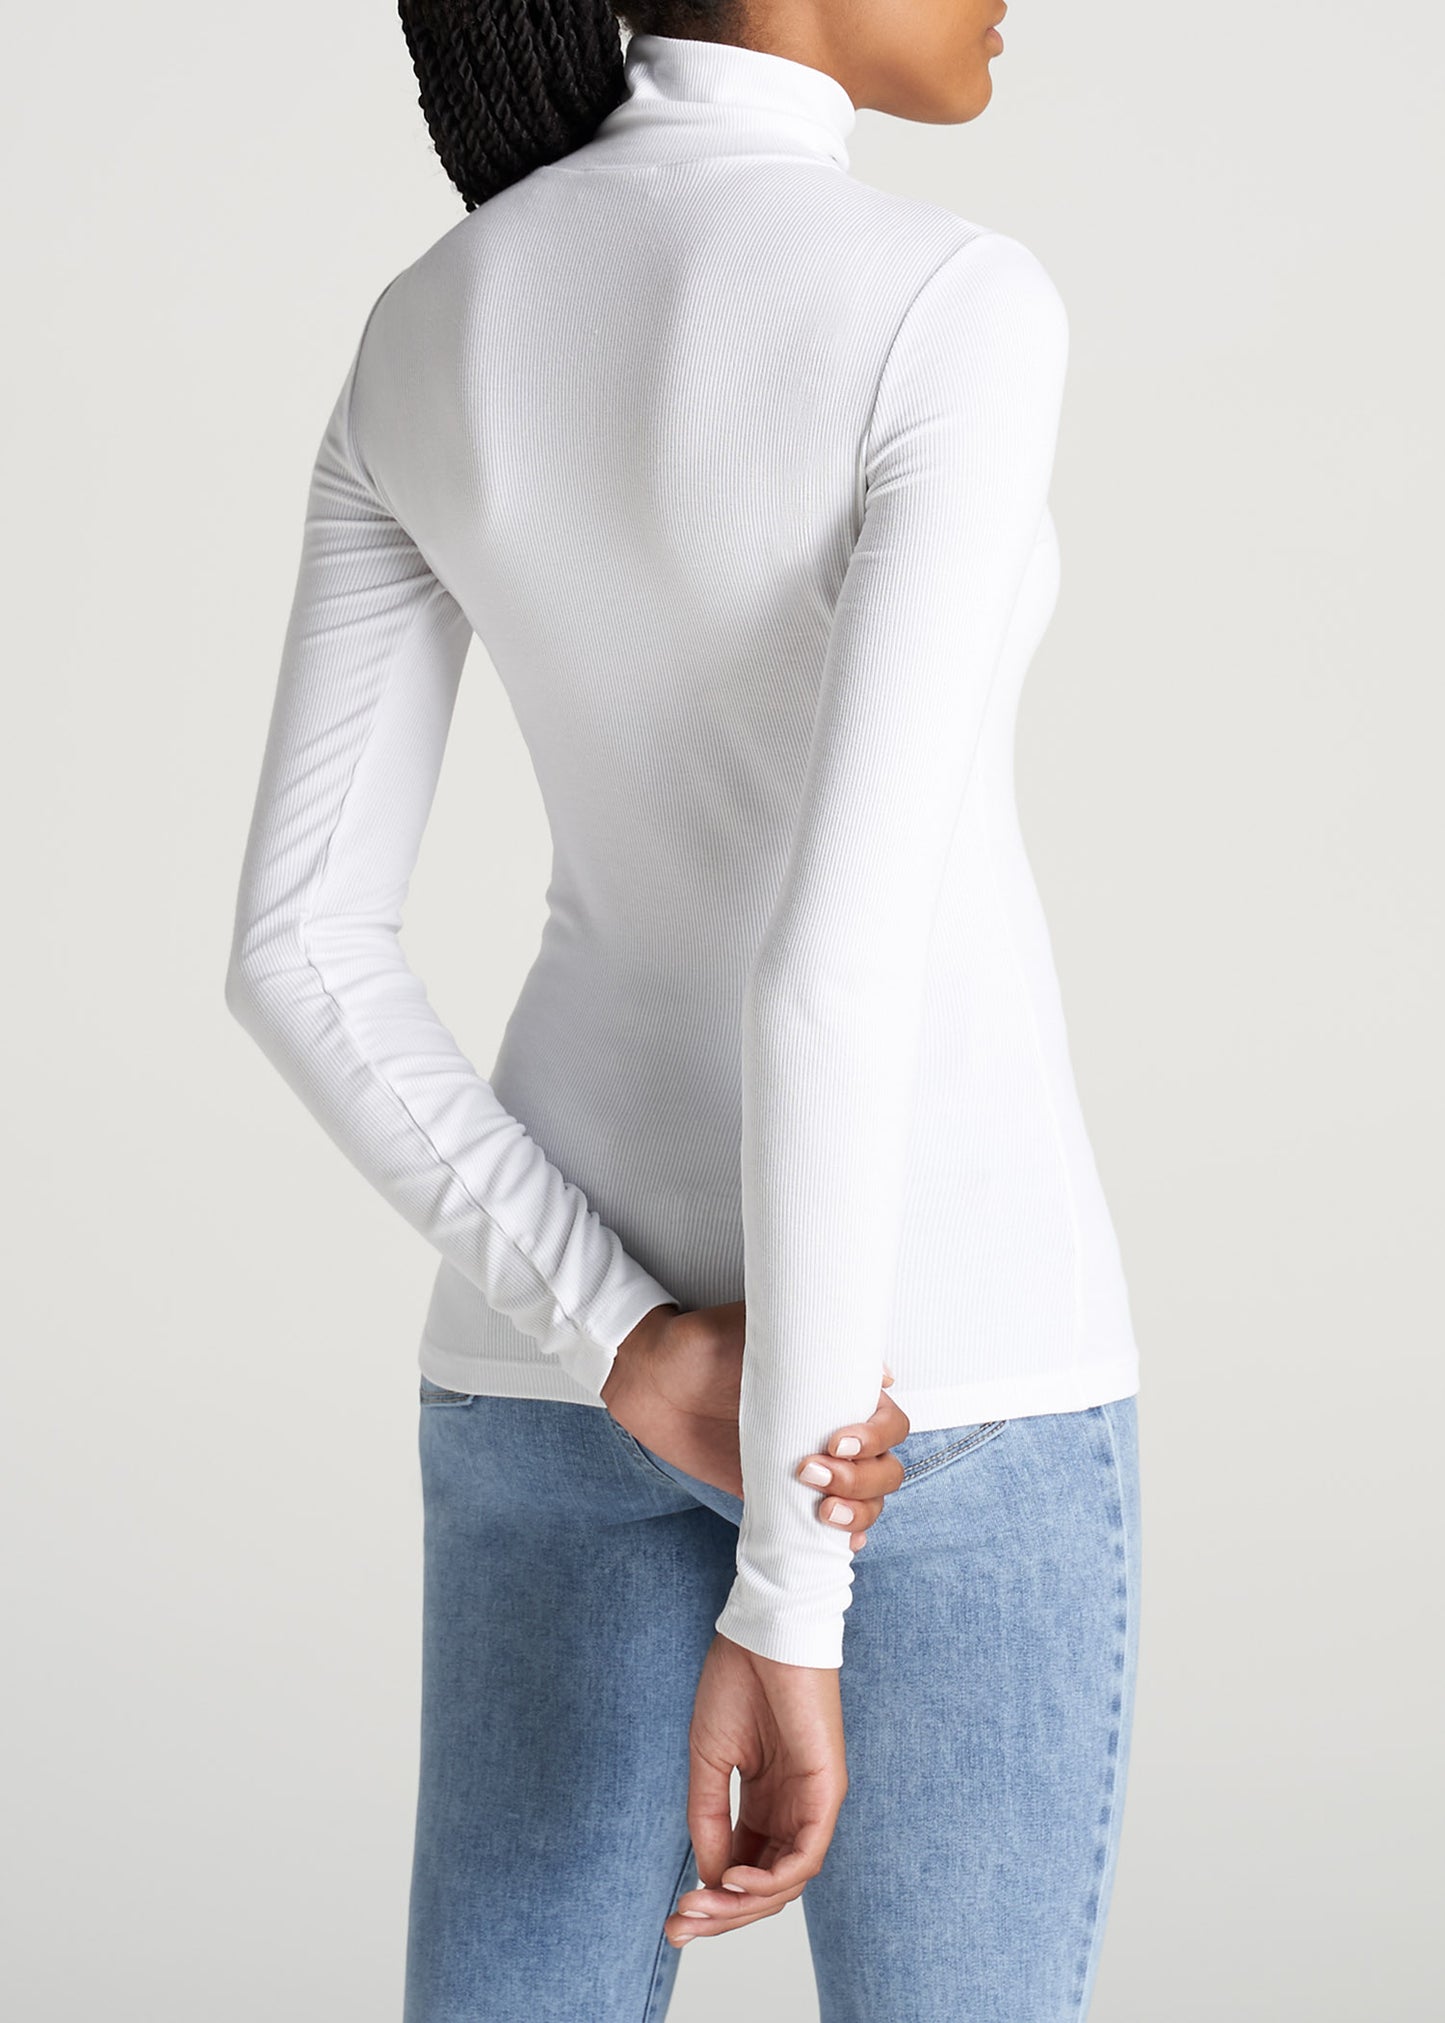 Women's Basic Turtle Neck Sweater Long Sleeve Ribbed Stretch